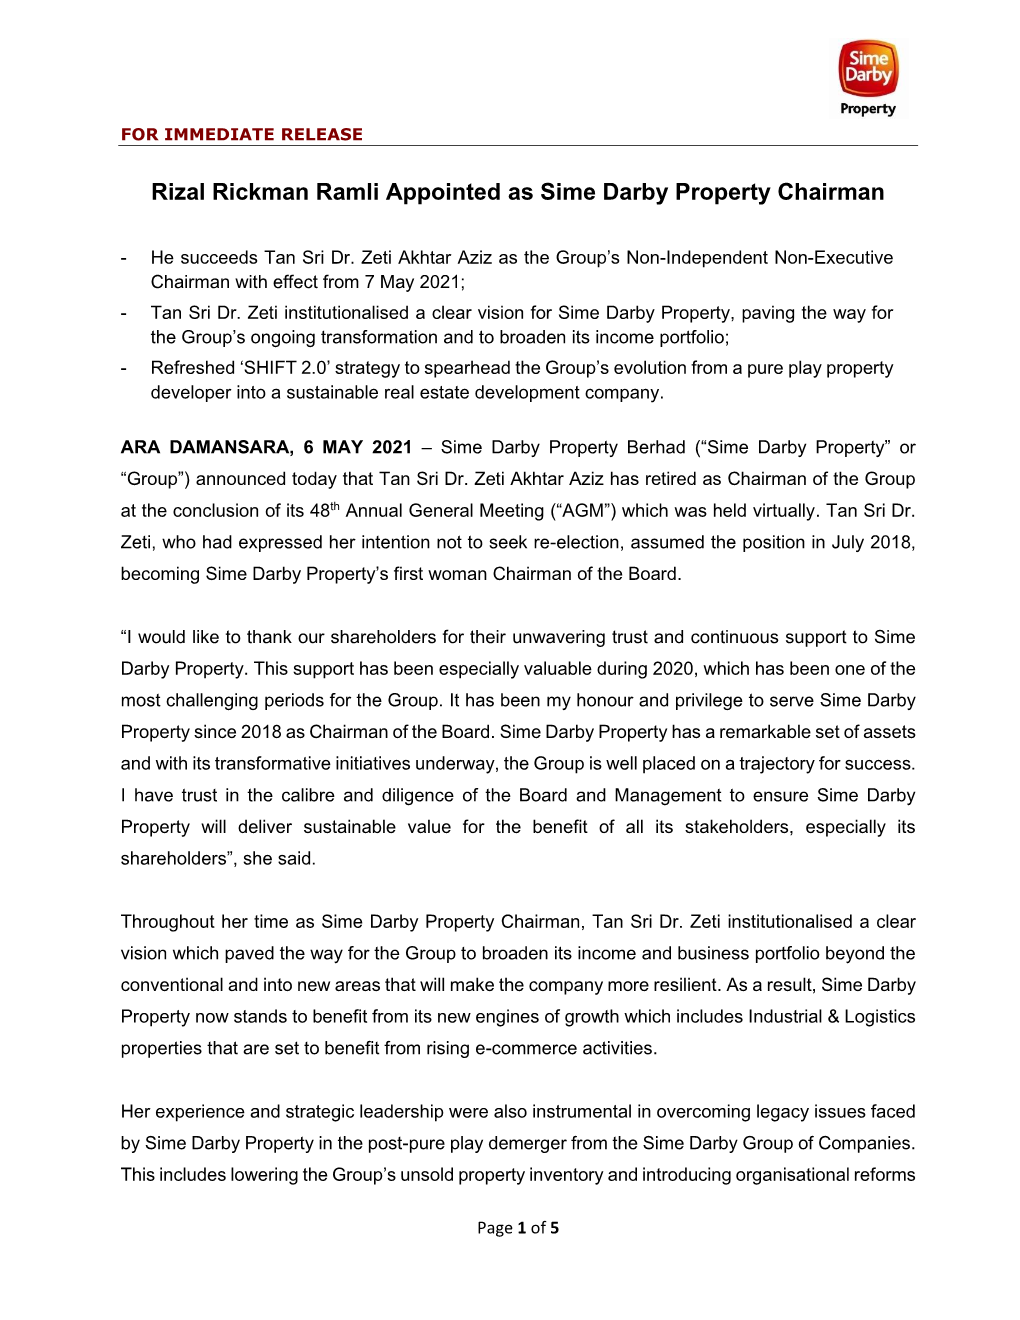 Rizal Rickman Ramli Appointed As Sime Darby Property Chairman